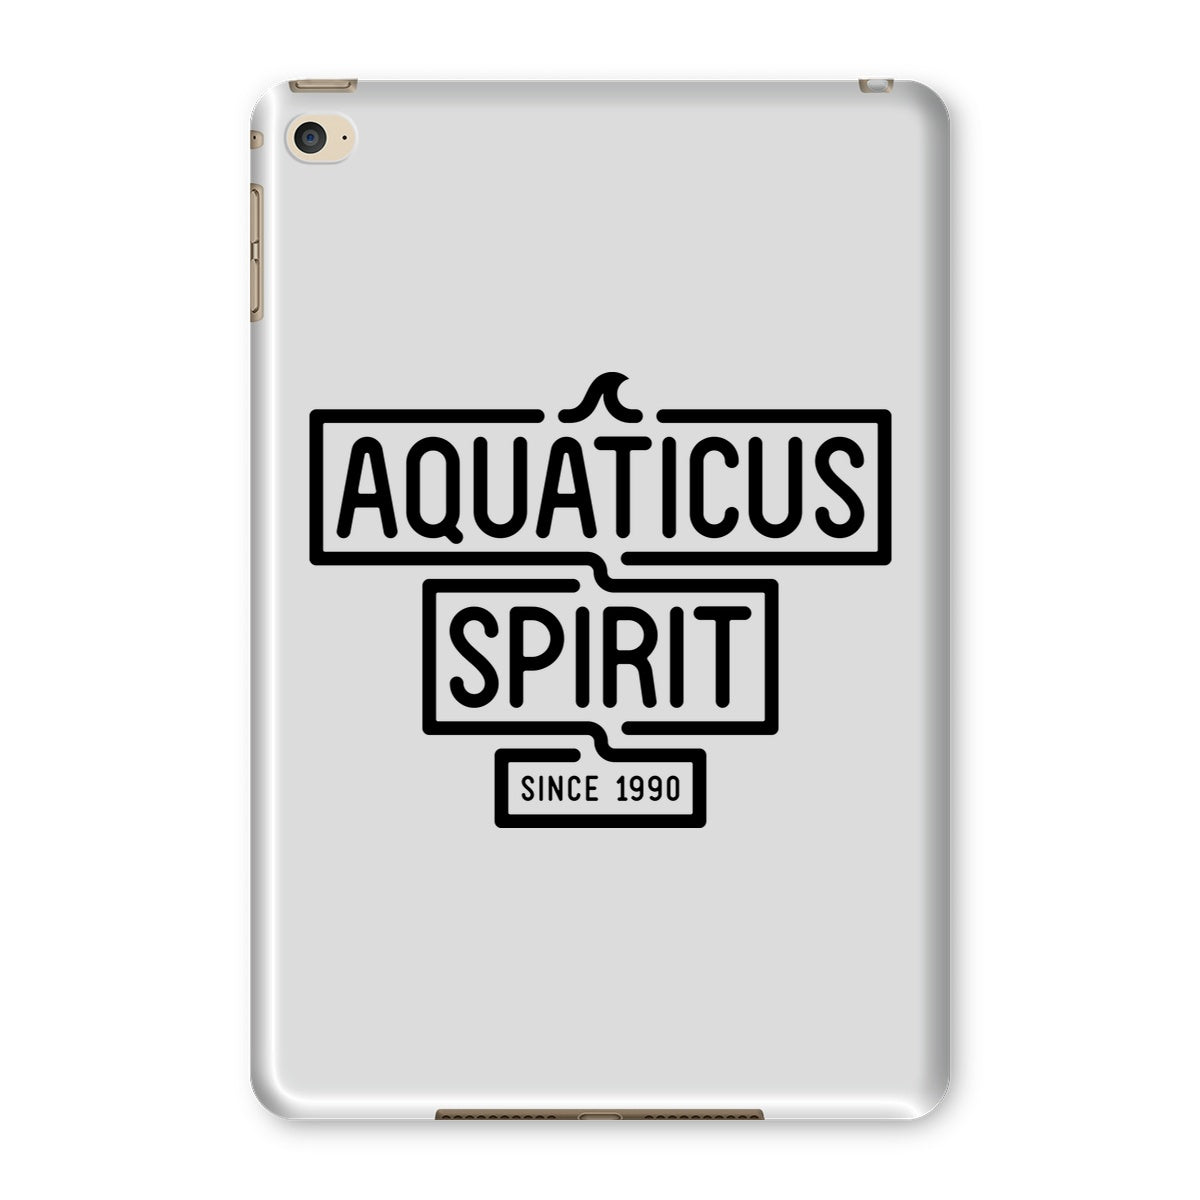 AQUA -  02 - Aquaticus Spirit - Tablet Case